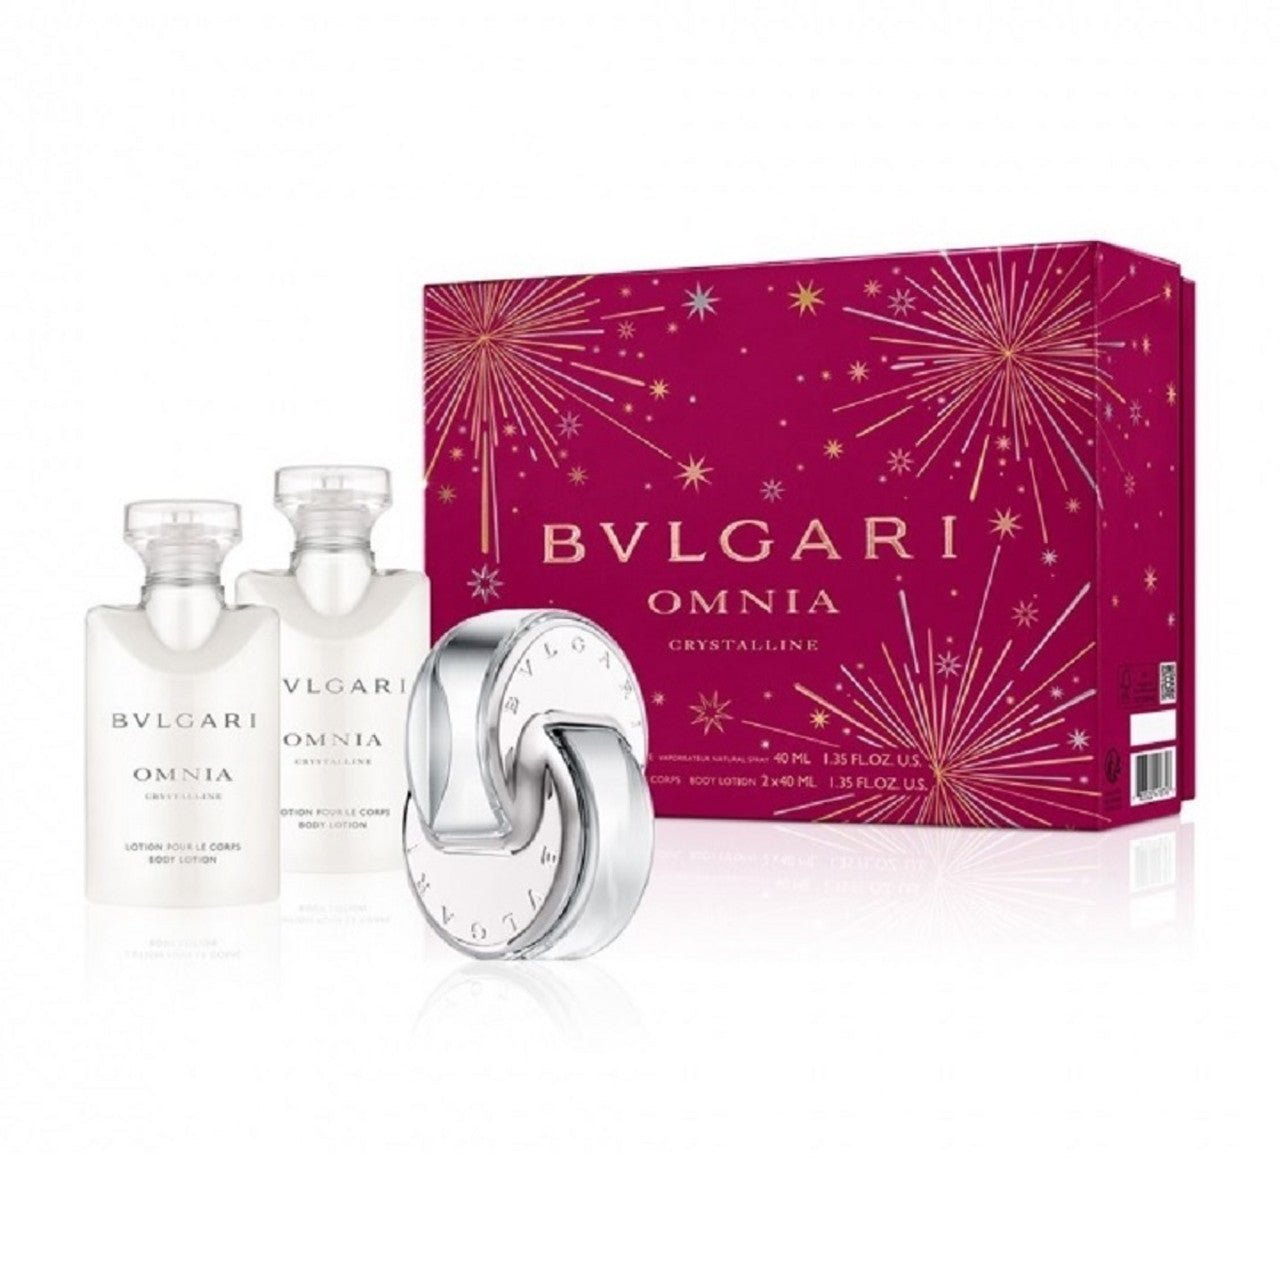 Bvlgari Omnia Crystalline EDT Body Lotion Set | My Perfume Shop Australia